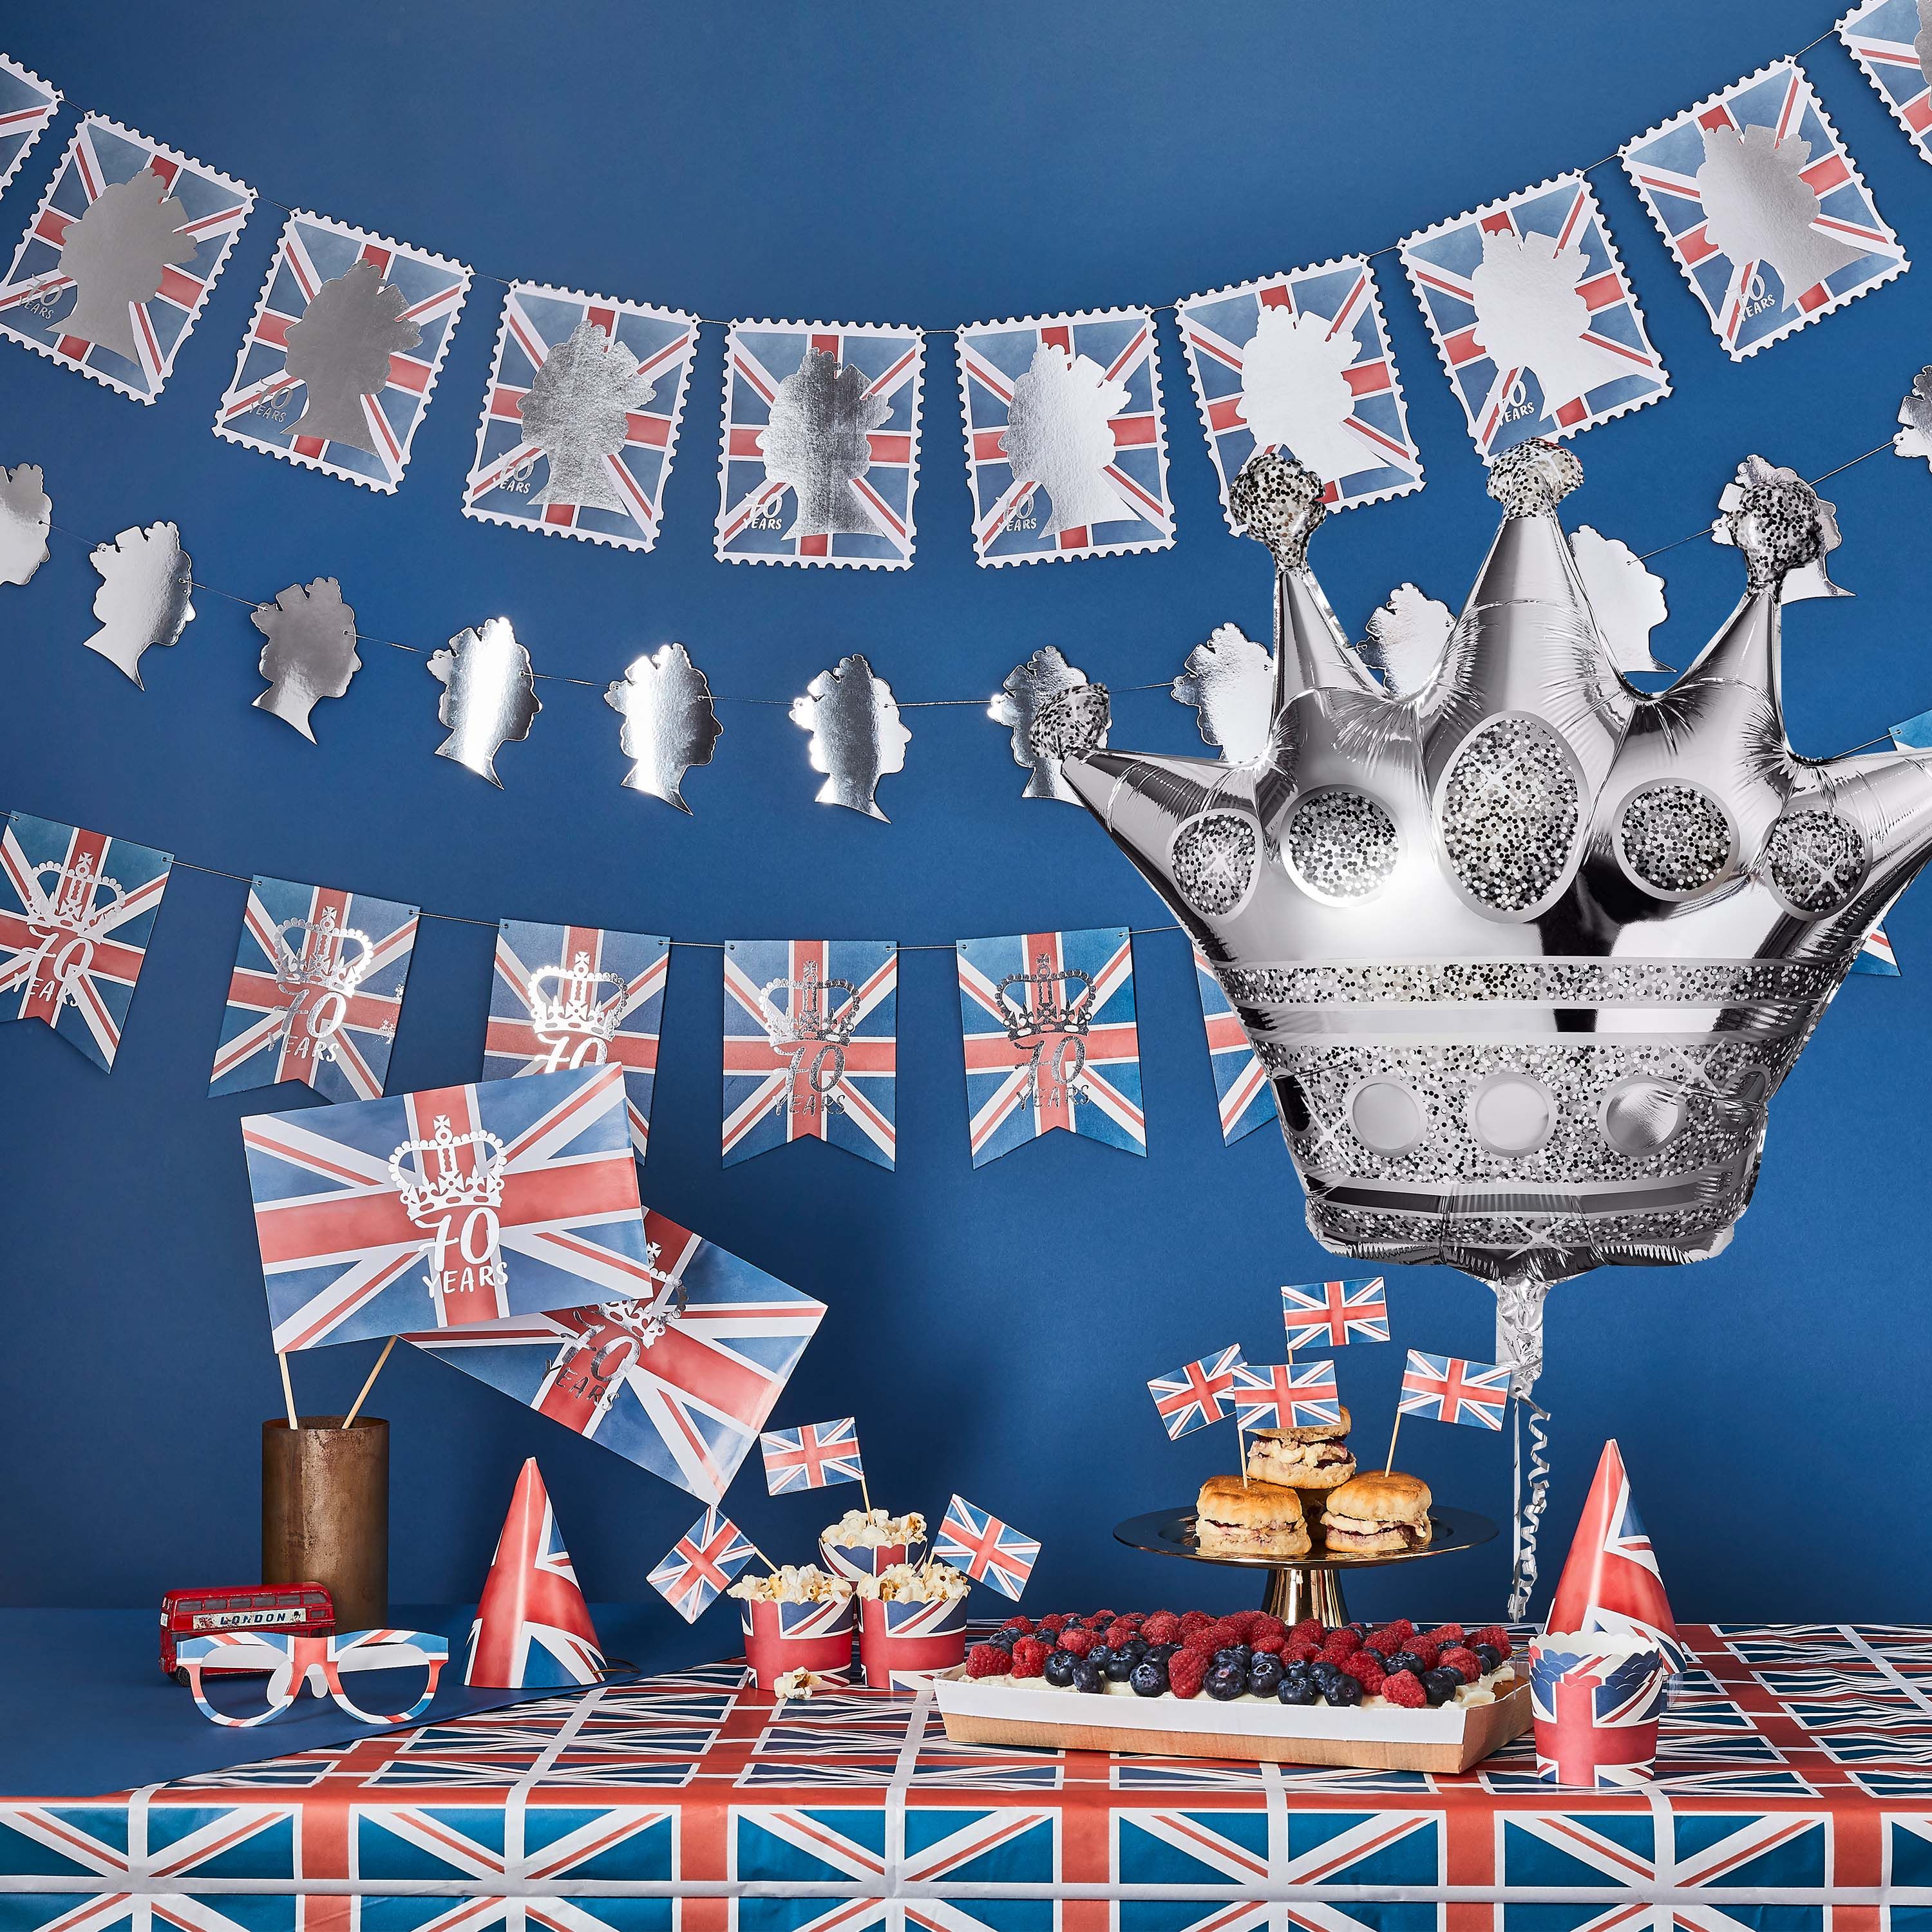 Royally British & Platinum Jubilee Celebration range